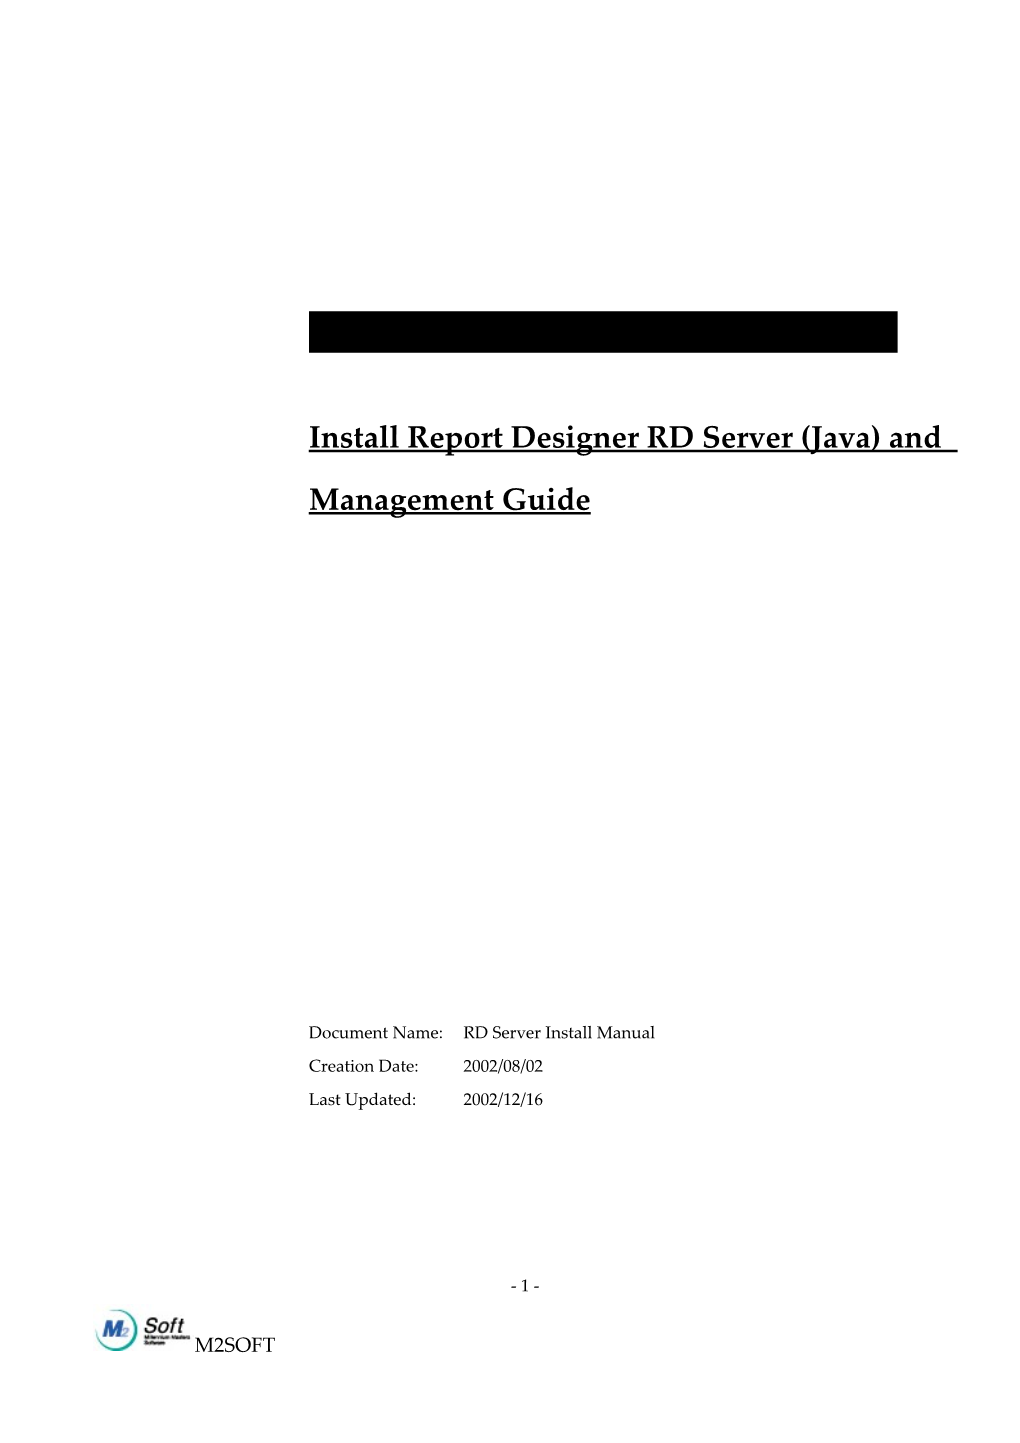 Install Report Designer RD Server (Java) And